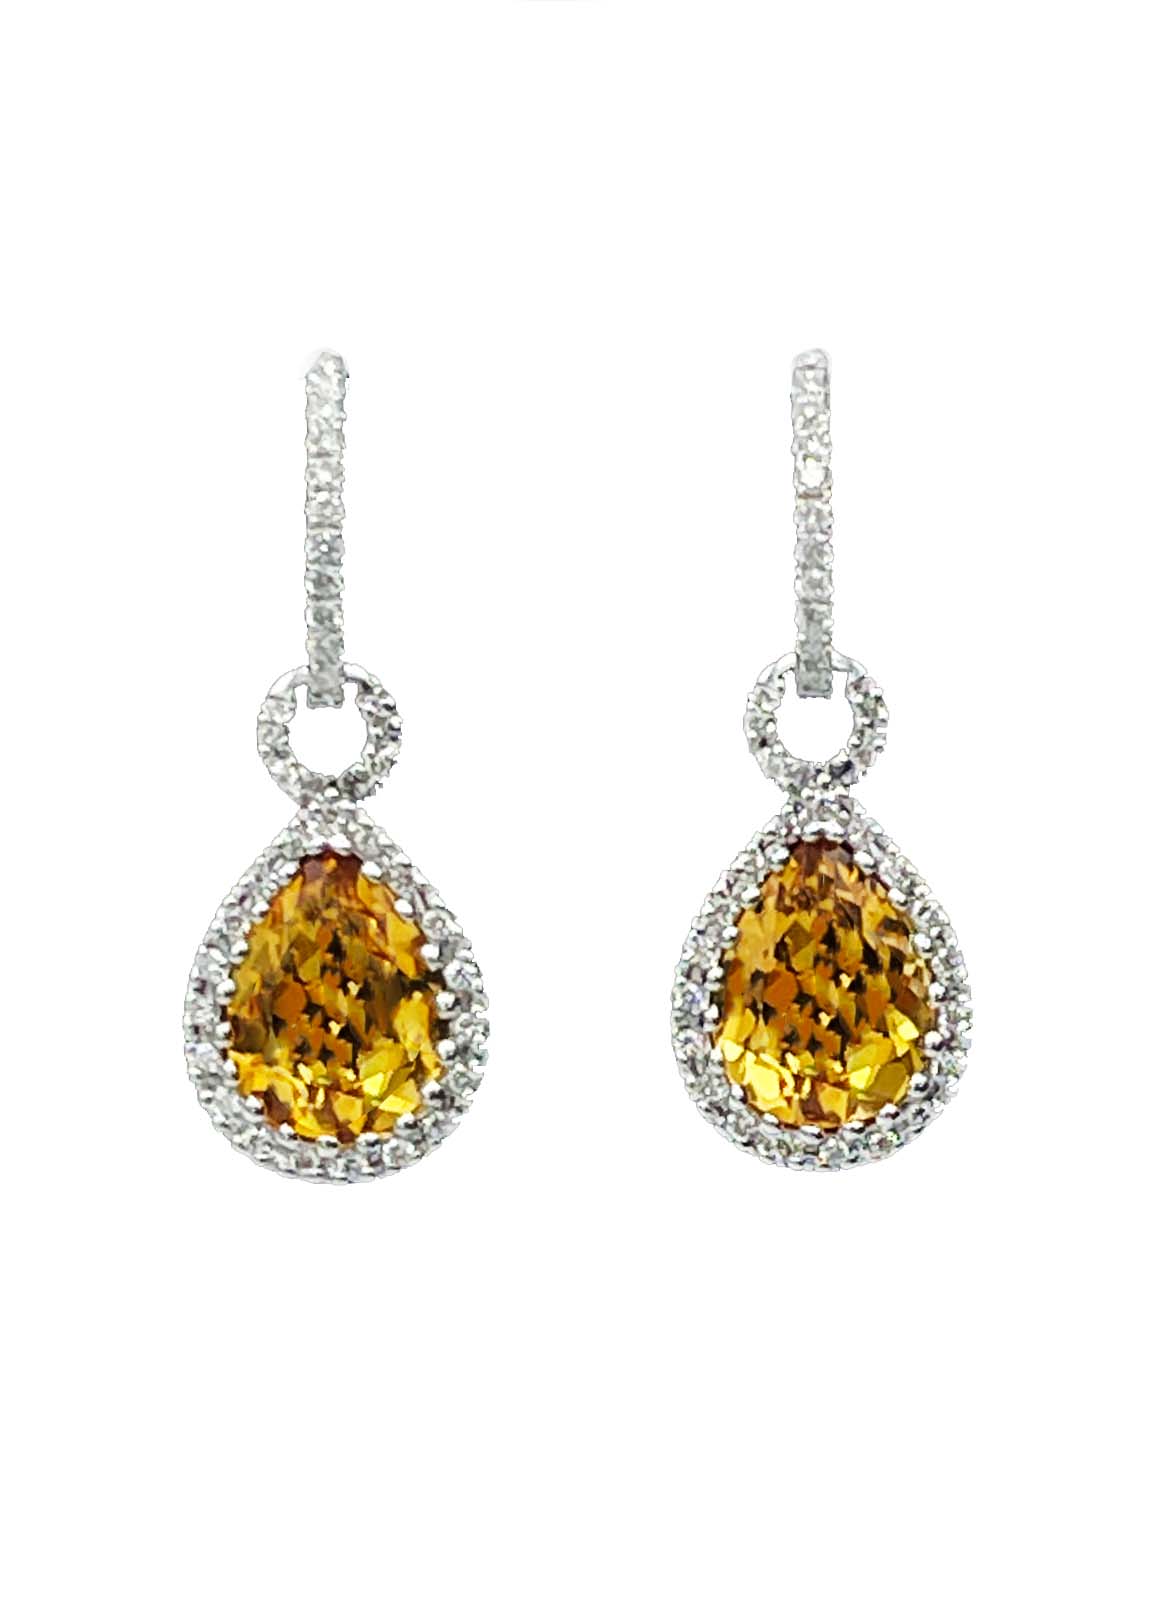 18k White Gold Topaz and Diamond Drop Earrings Image